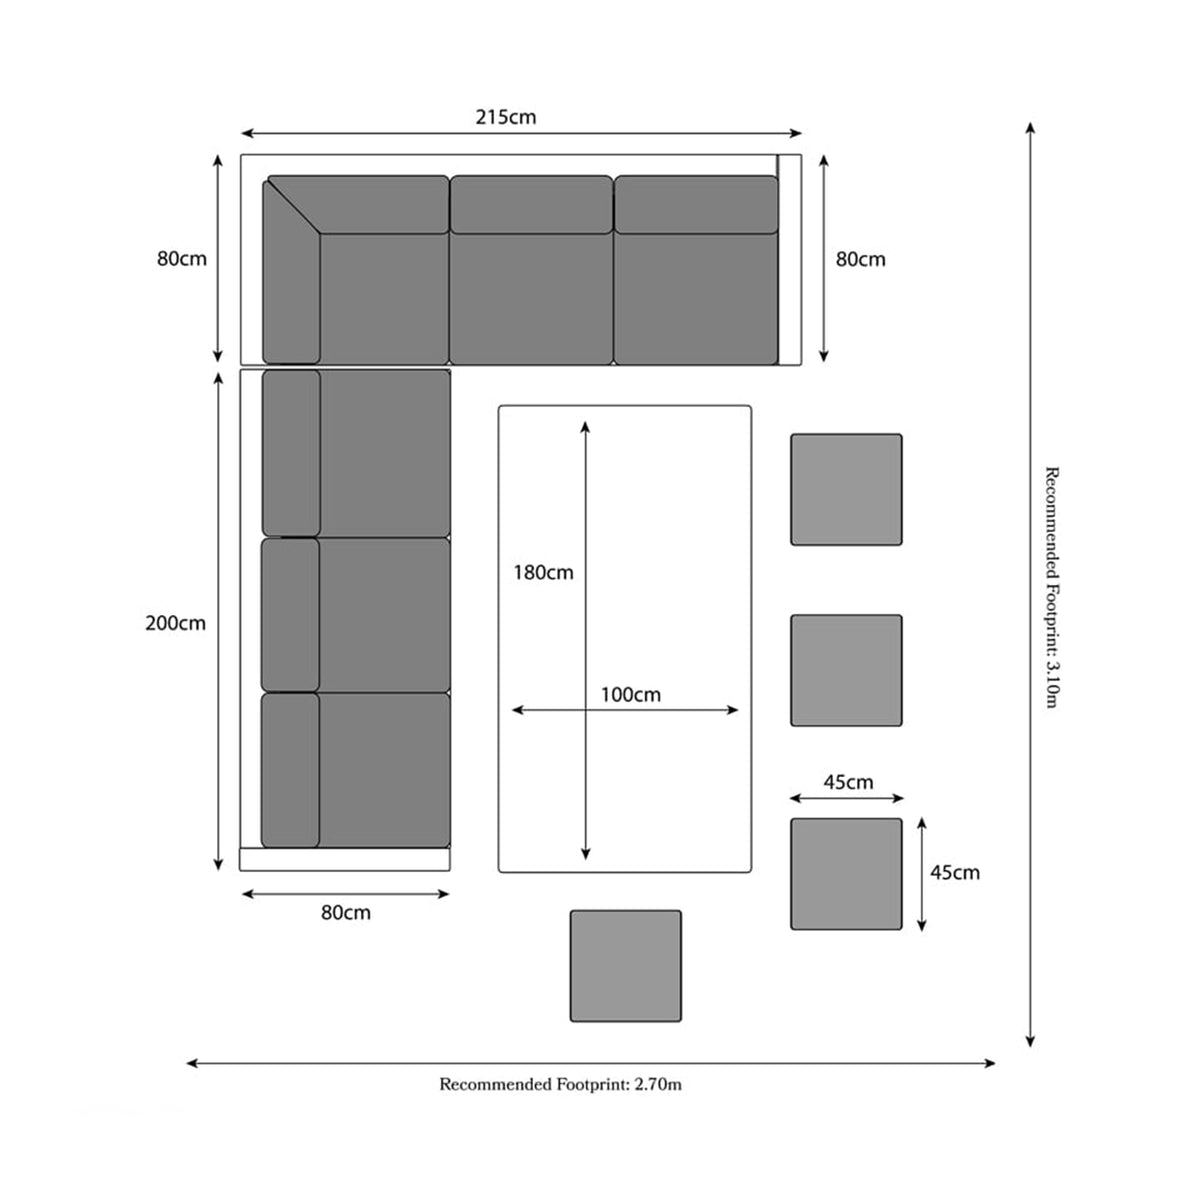 Parisian 180cm Rattan Corner Lounge Garden Dining Set Dimension & Size Guide